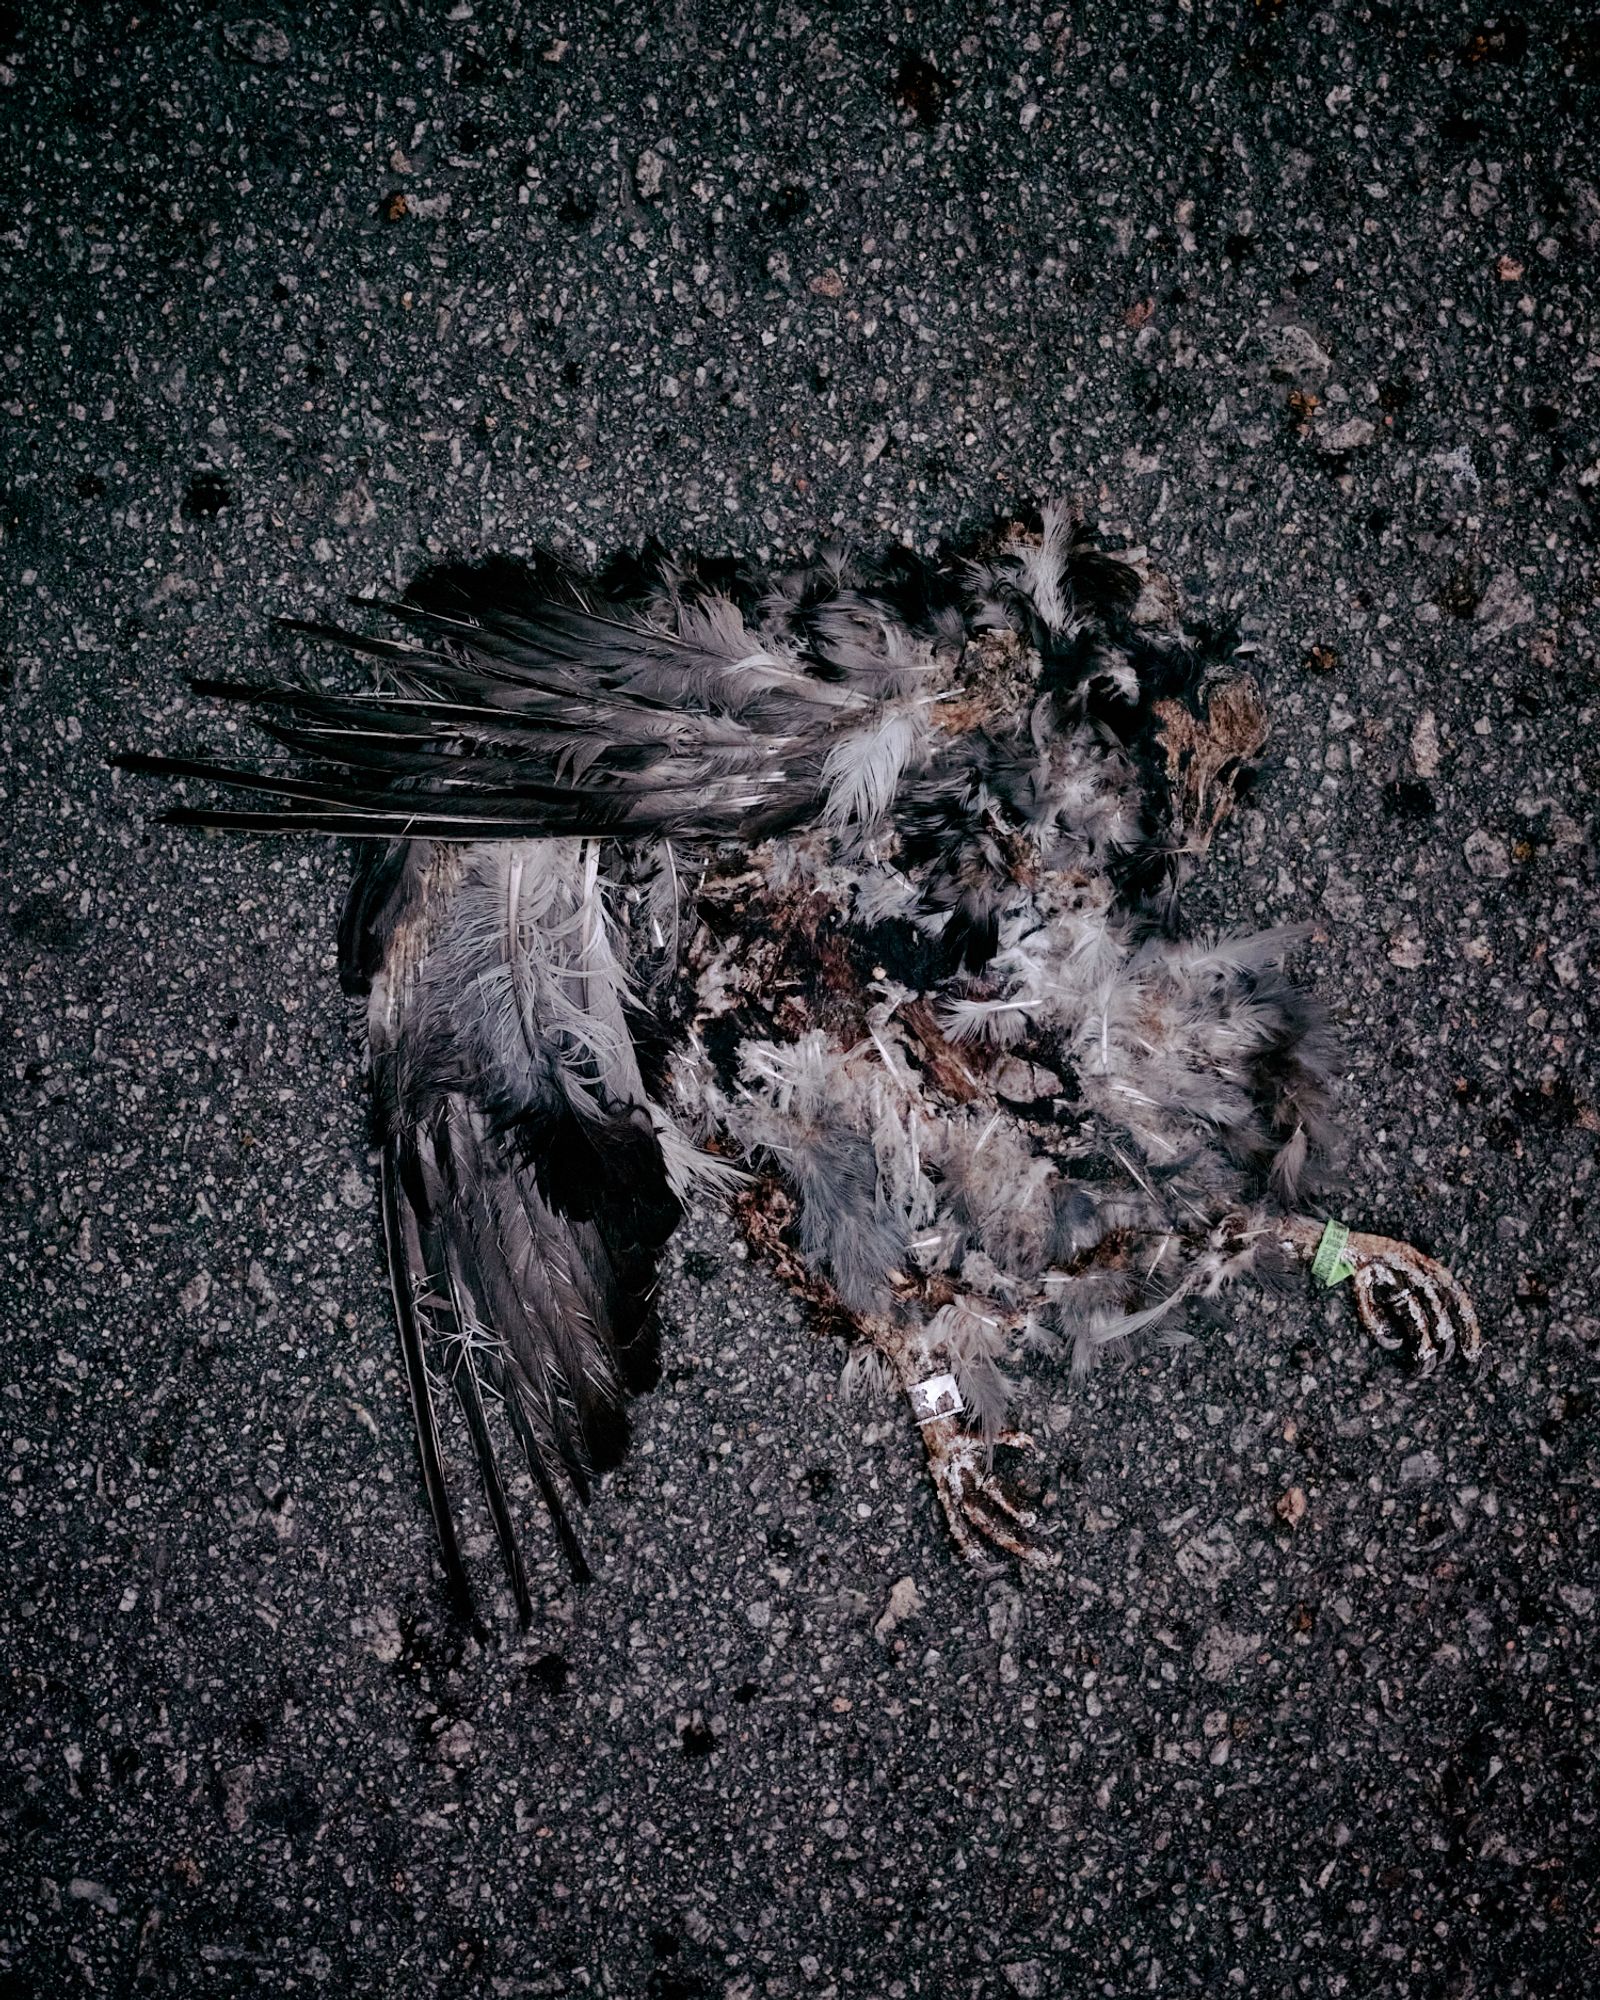 © Chung-wai Wong - A bird that was run over by a car.